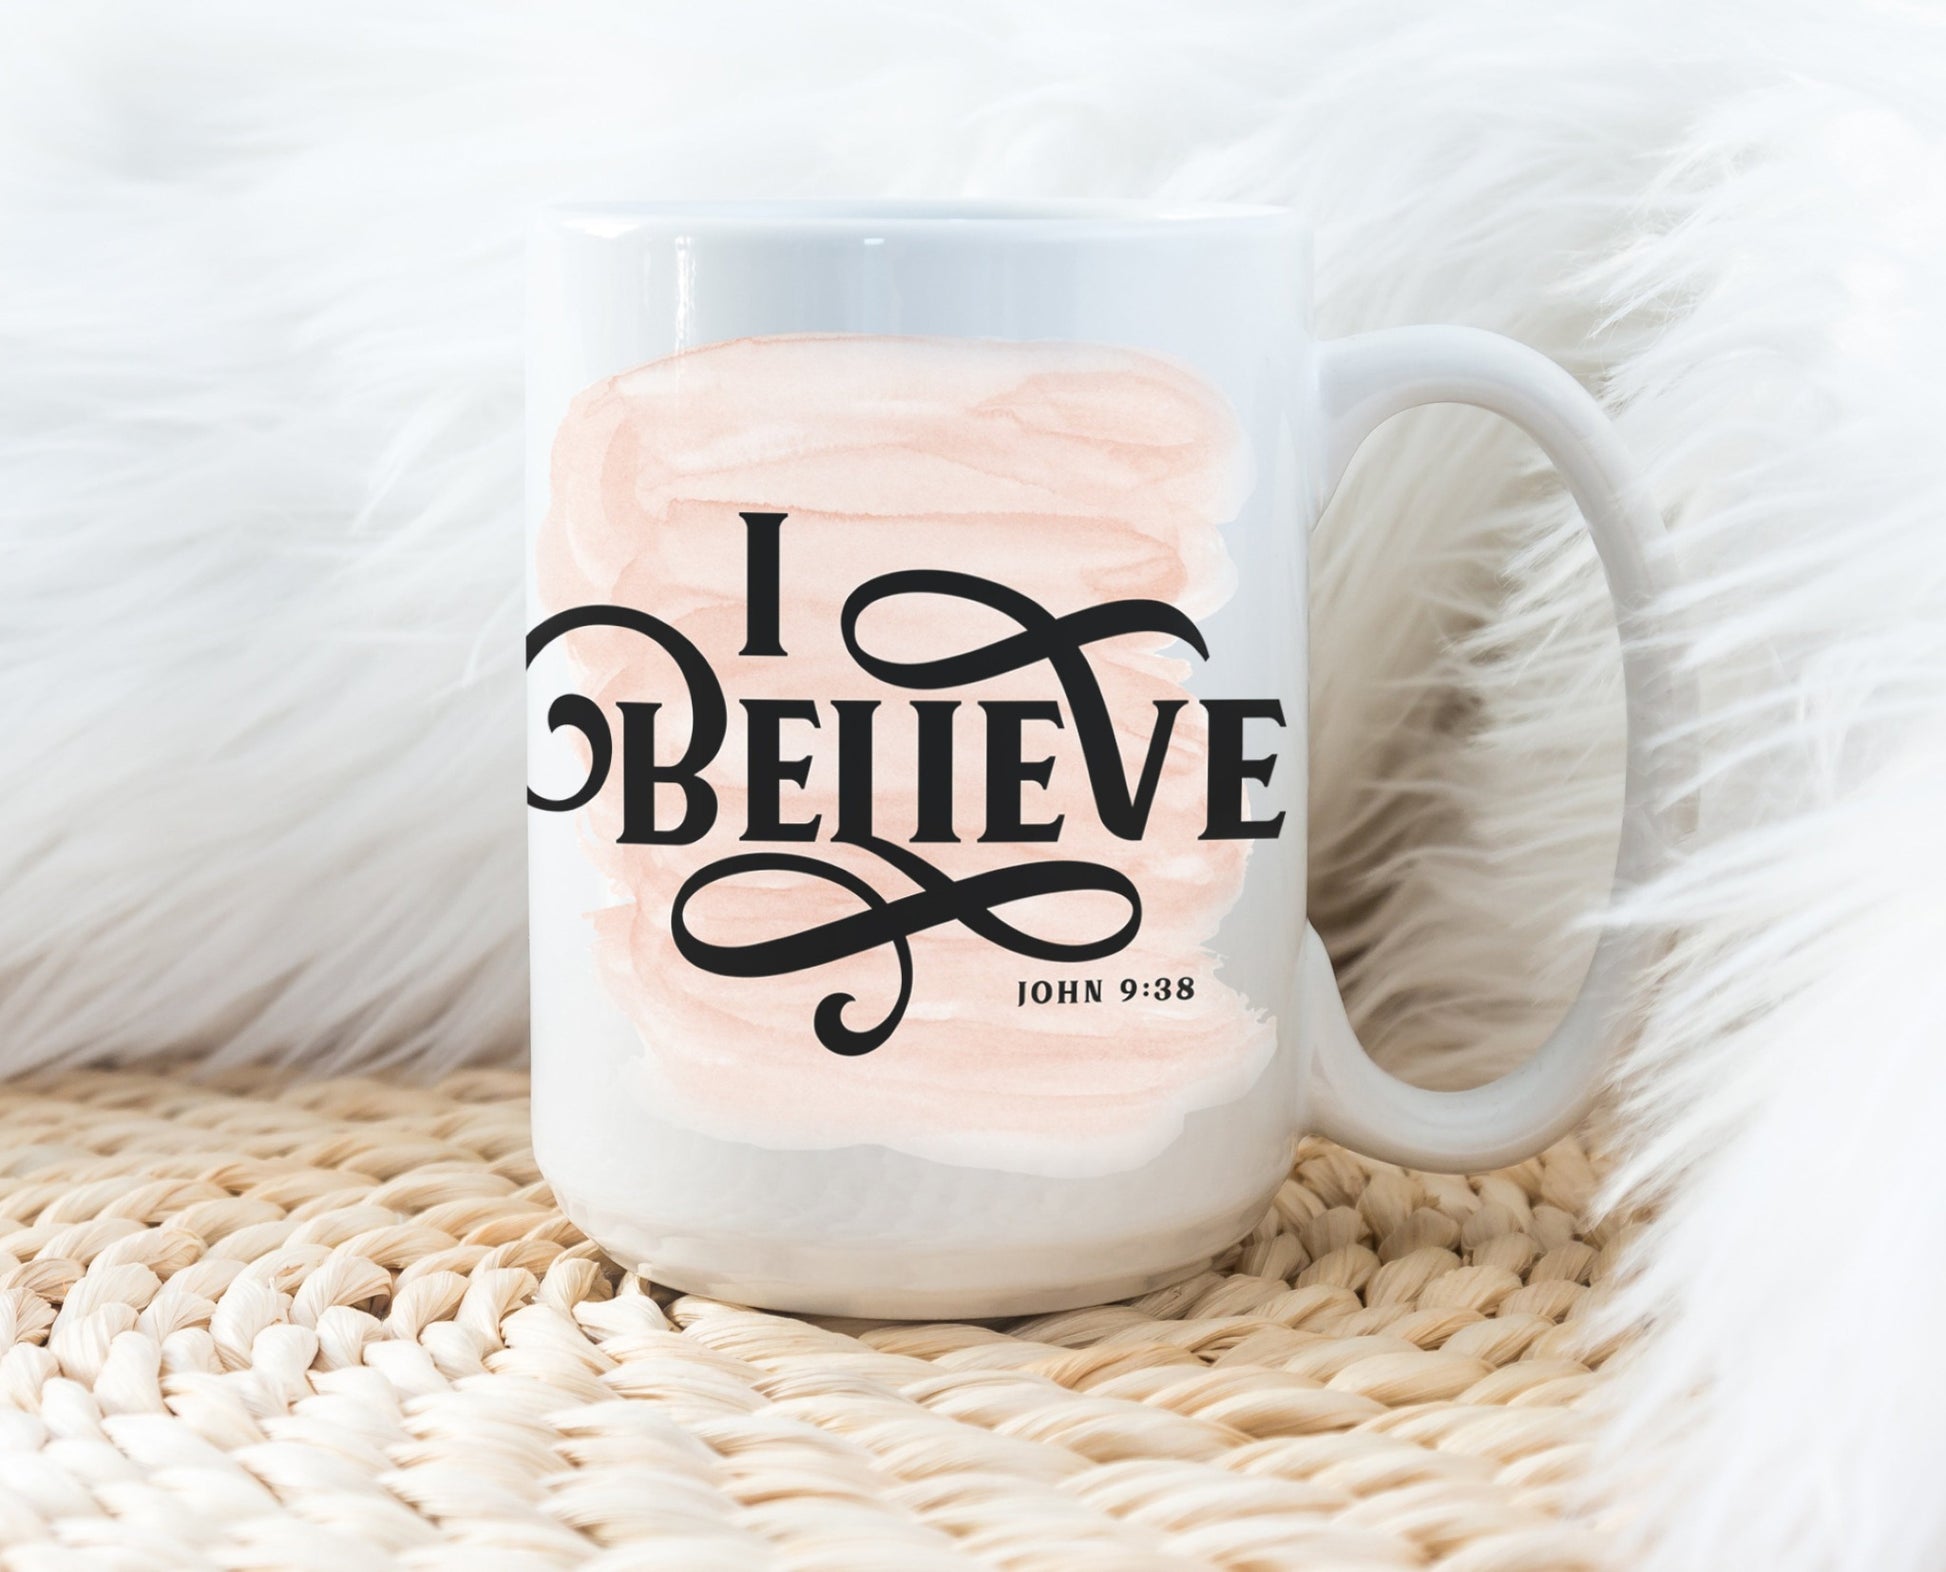 I Believe Swirl faith based Christian aesthetic John 9 bible verse peach pink watercolor splash background printed on white 15 oz. sturdy ceramic mug